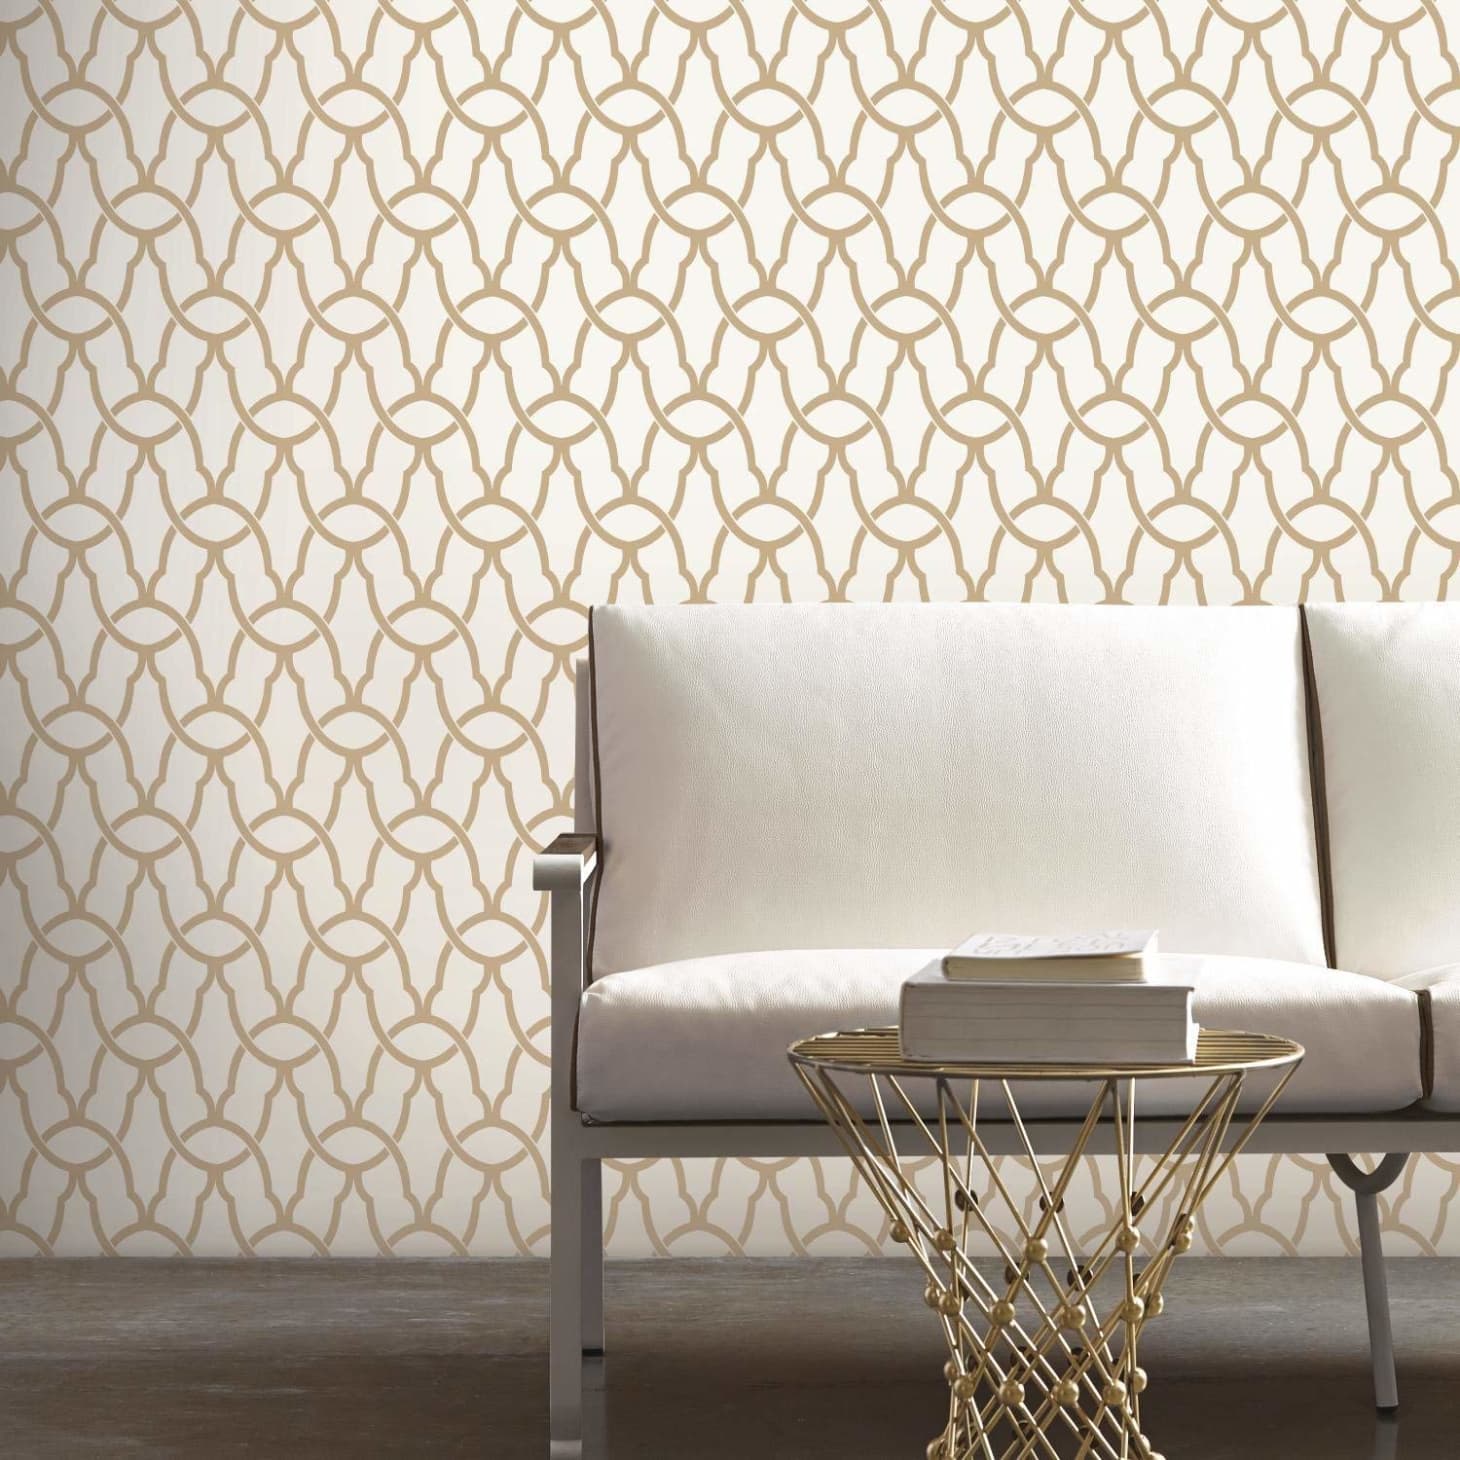 1. RoomMates Gold Trellis Peel And Stick Wallpaper